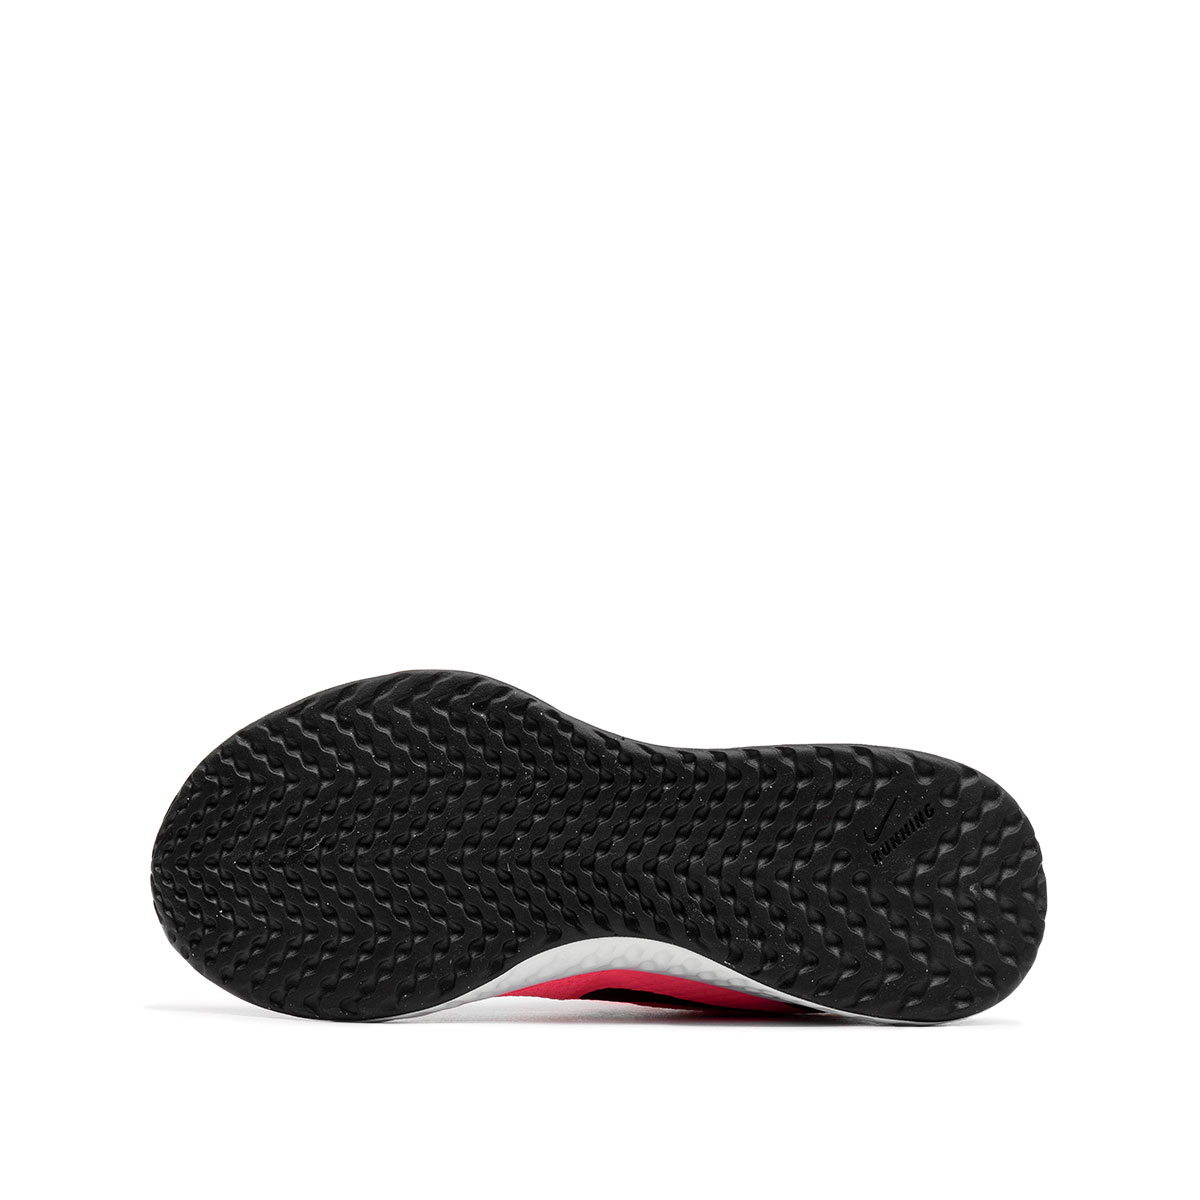 Nike Revolution 5  BQ5671-602